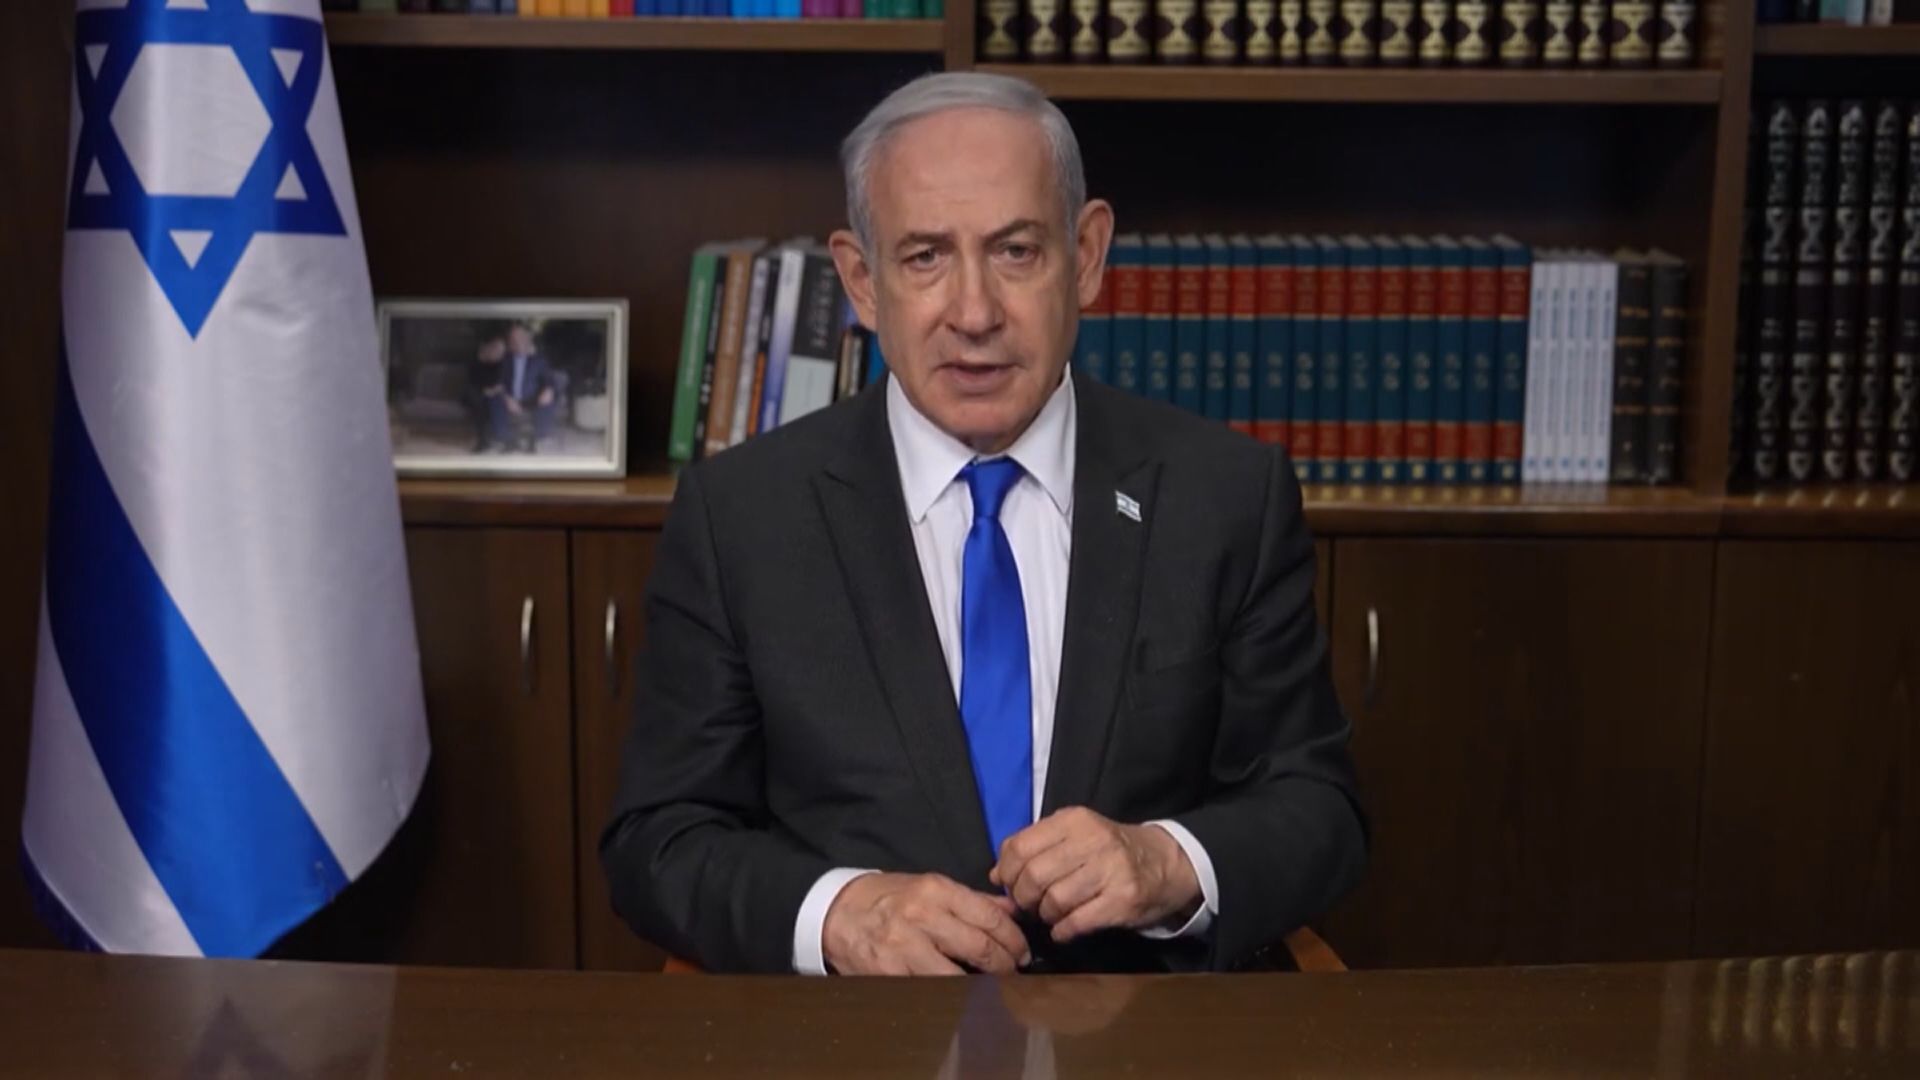 Mixed Reaction Over Upcoming Netanyahu Visit, More Democrats Plan to Boycott